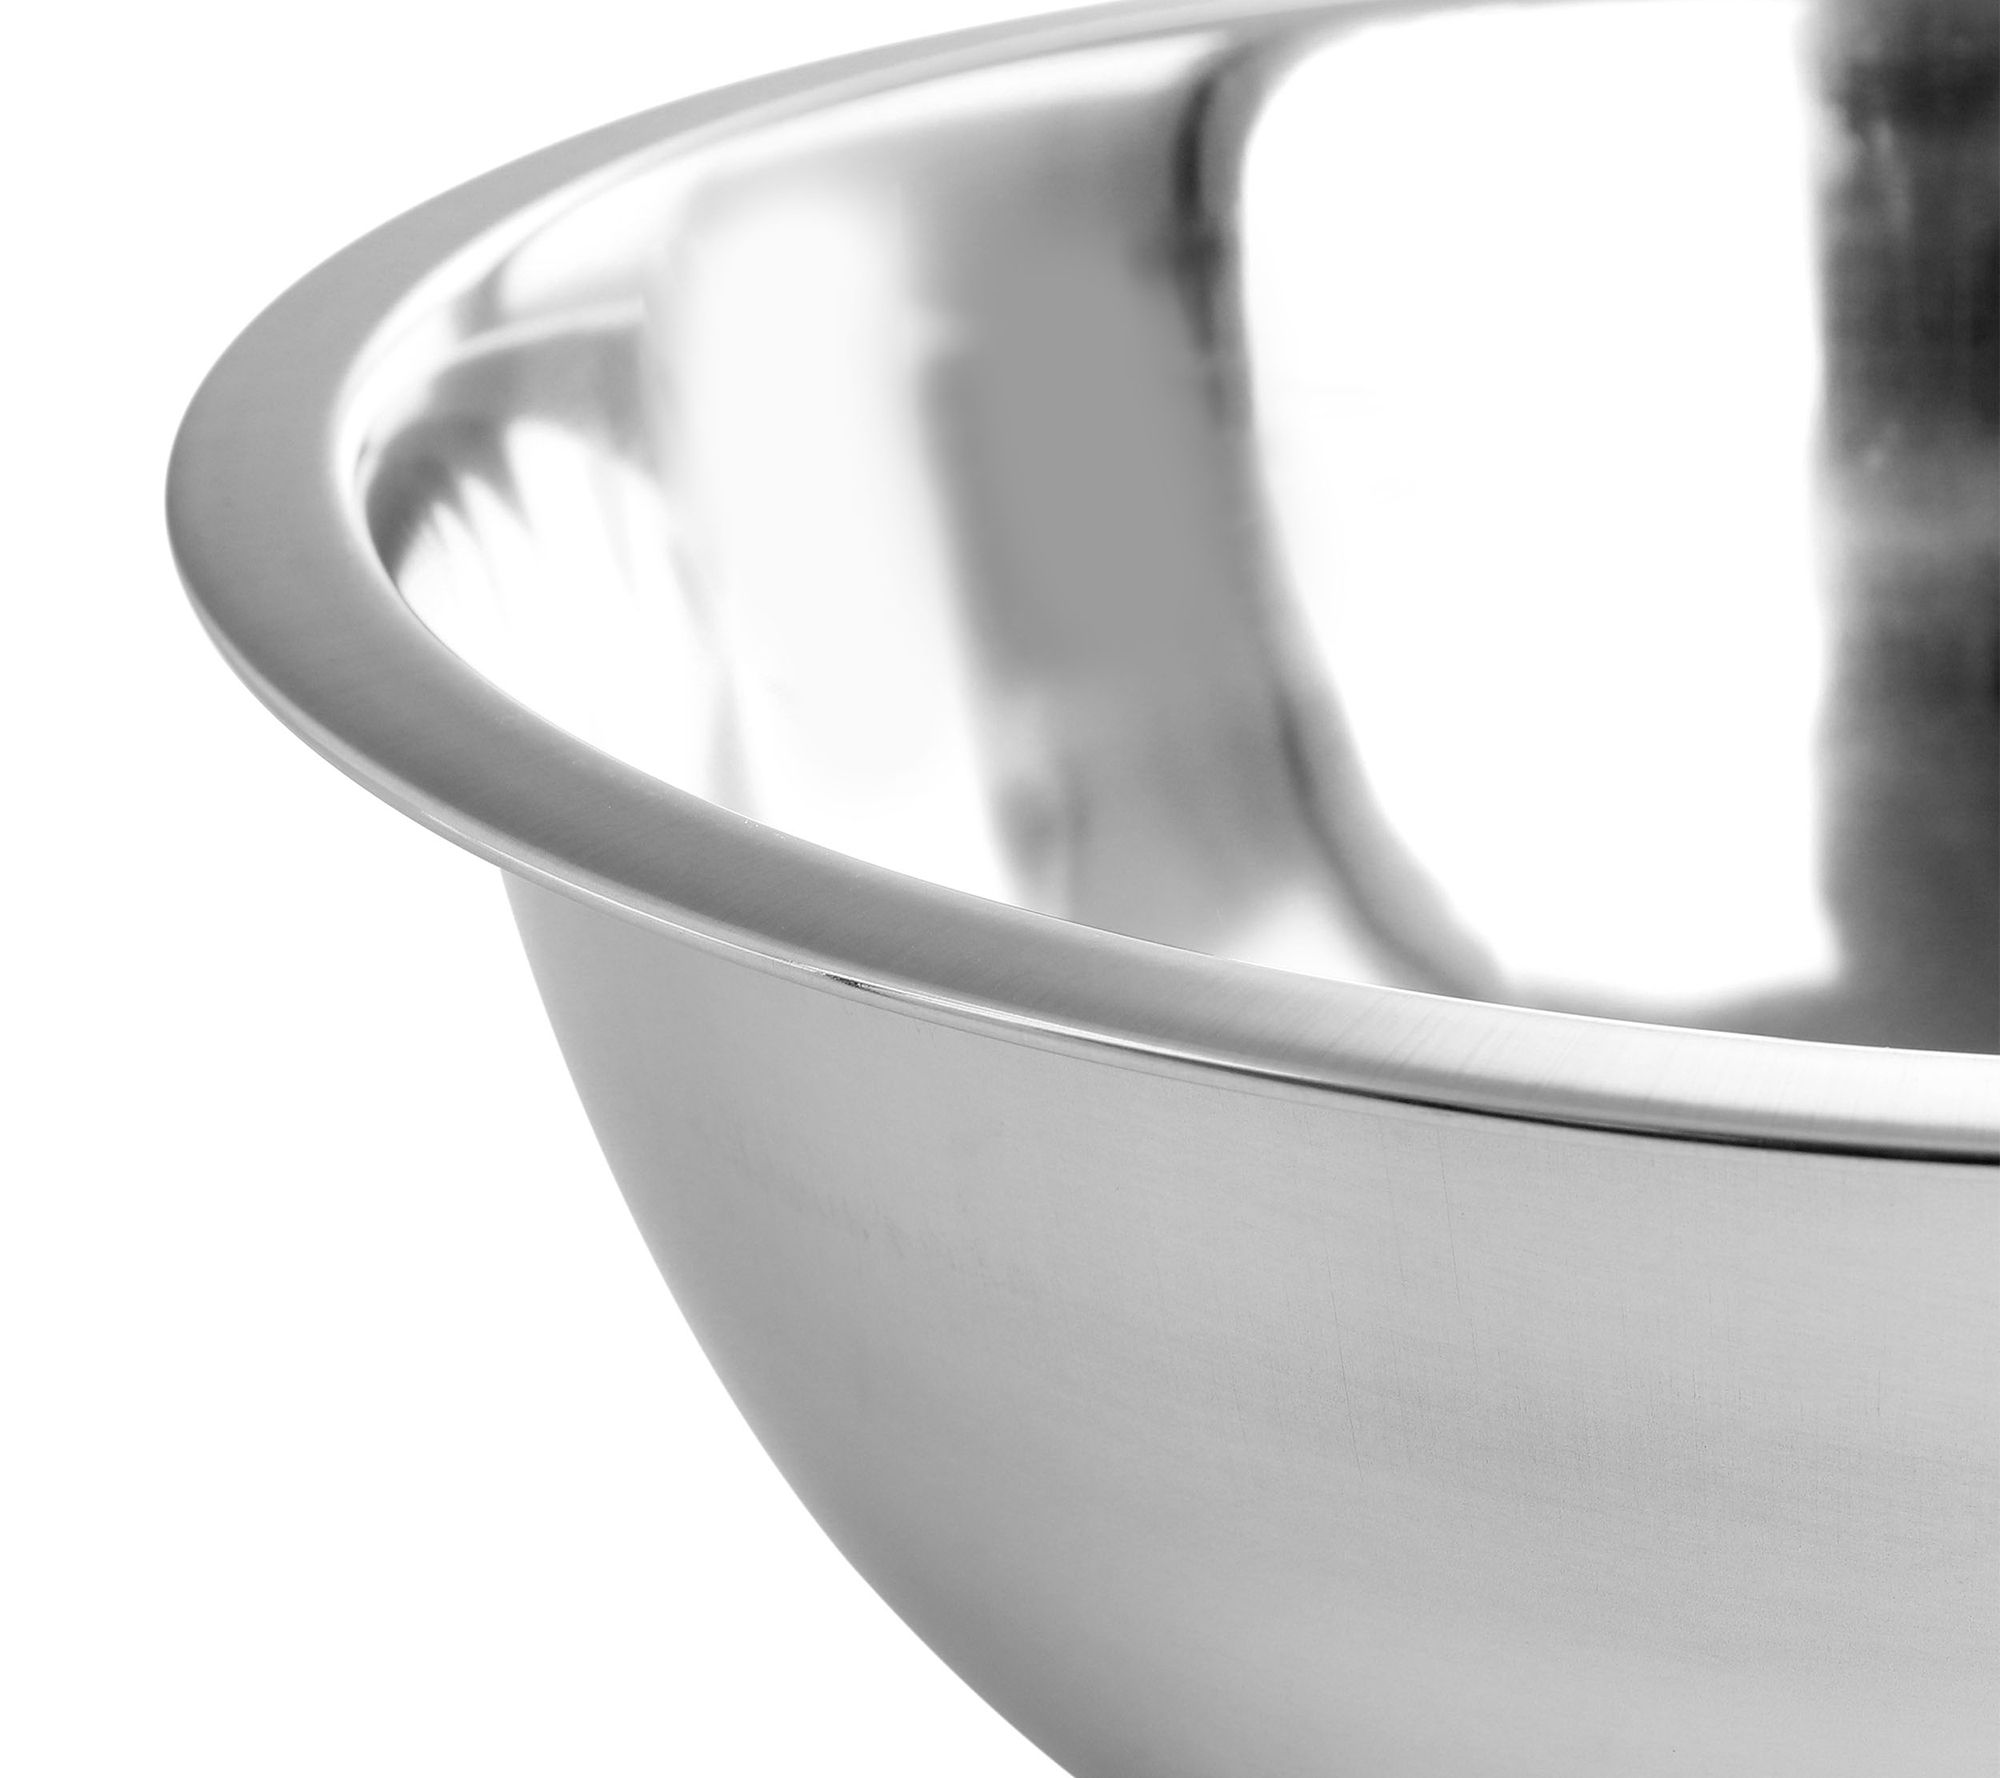 Martha Stewart Everyday 4.6 Quart Stainless Steel Mixing Bowl : Target